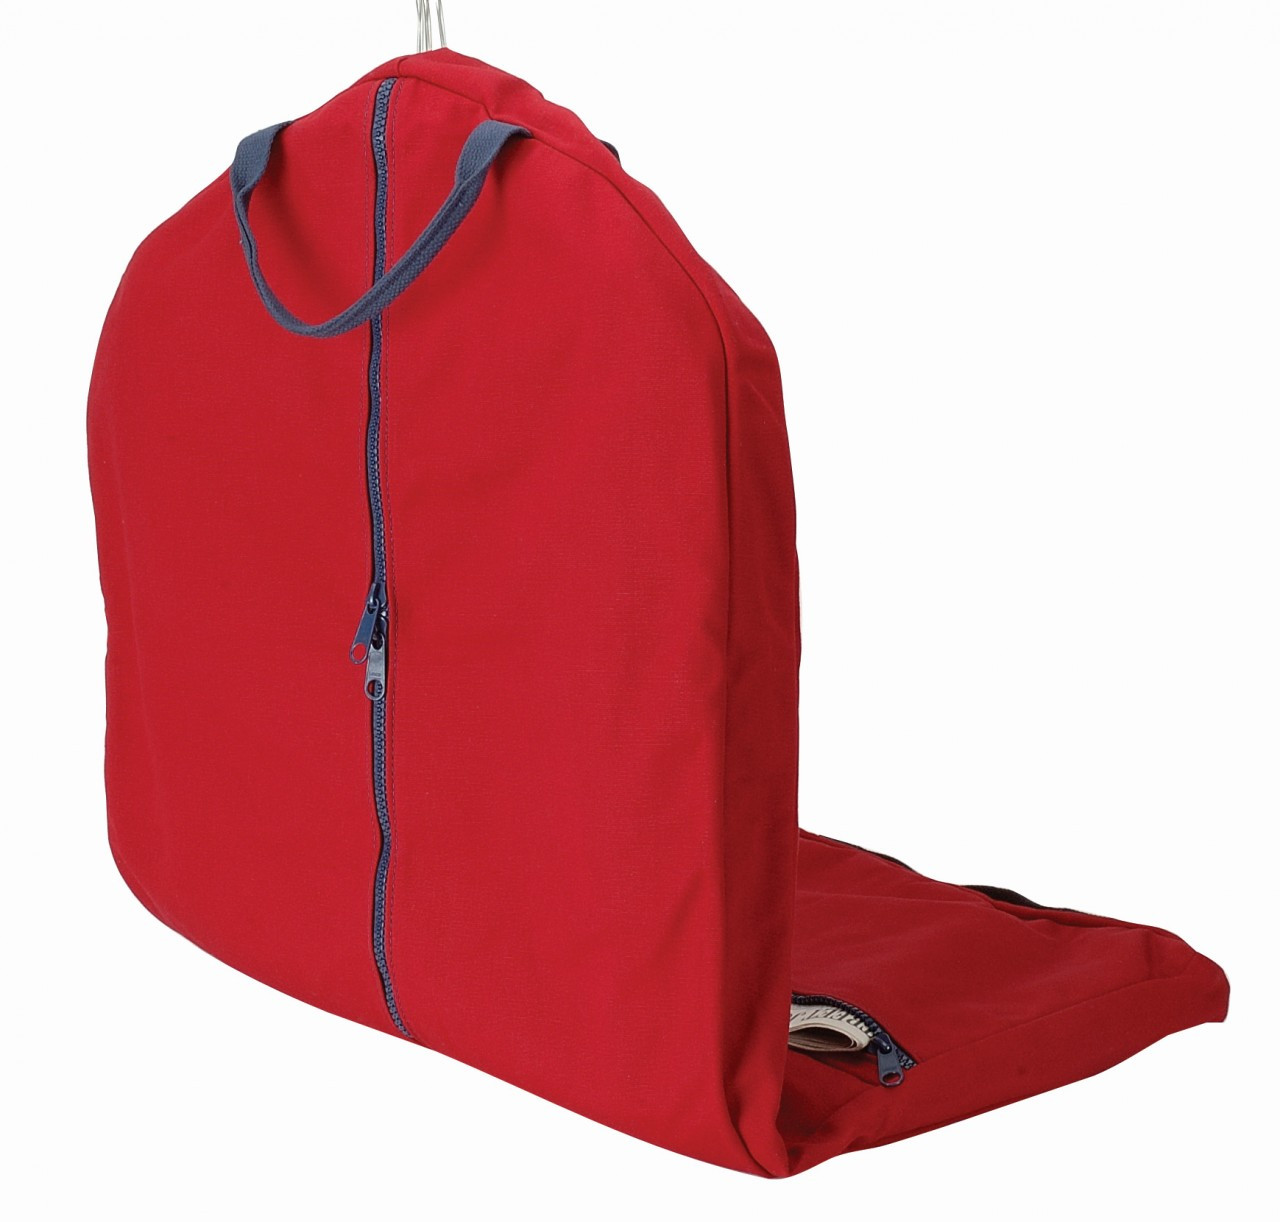 Canvas Garment Bag Suit Bag Travel Weekend Bag Flight Bag